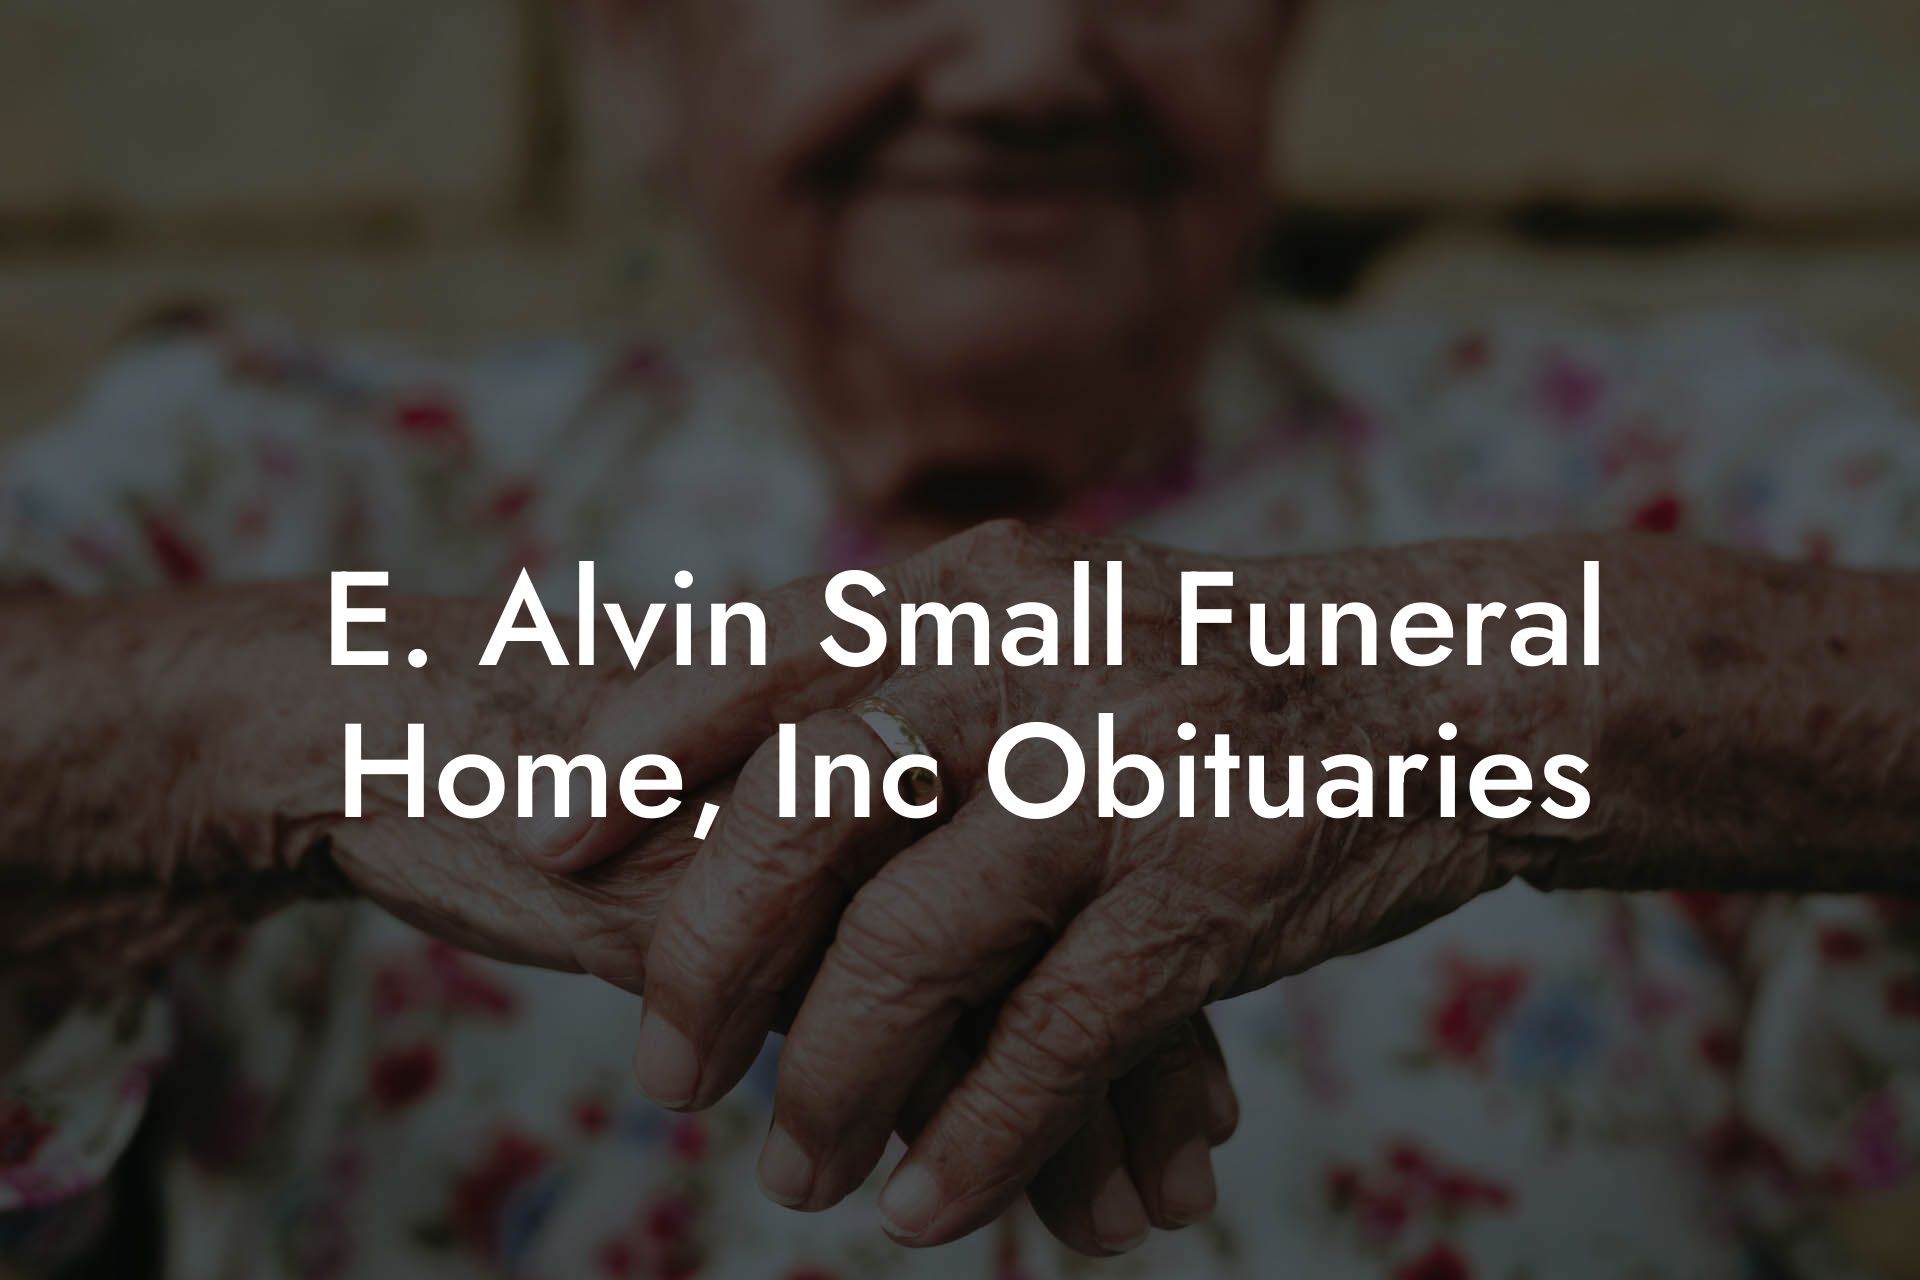 E. Alvin Small Funeral Home, Inc Obituaries